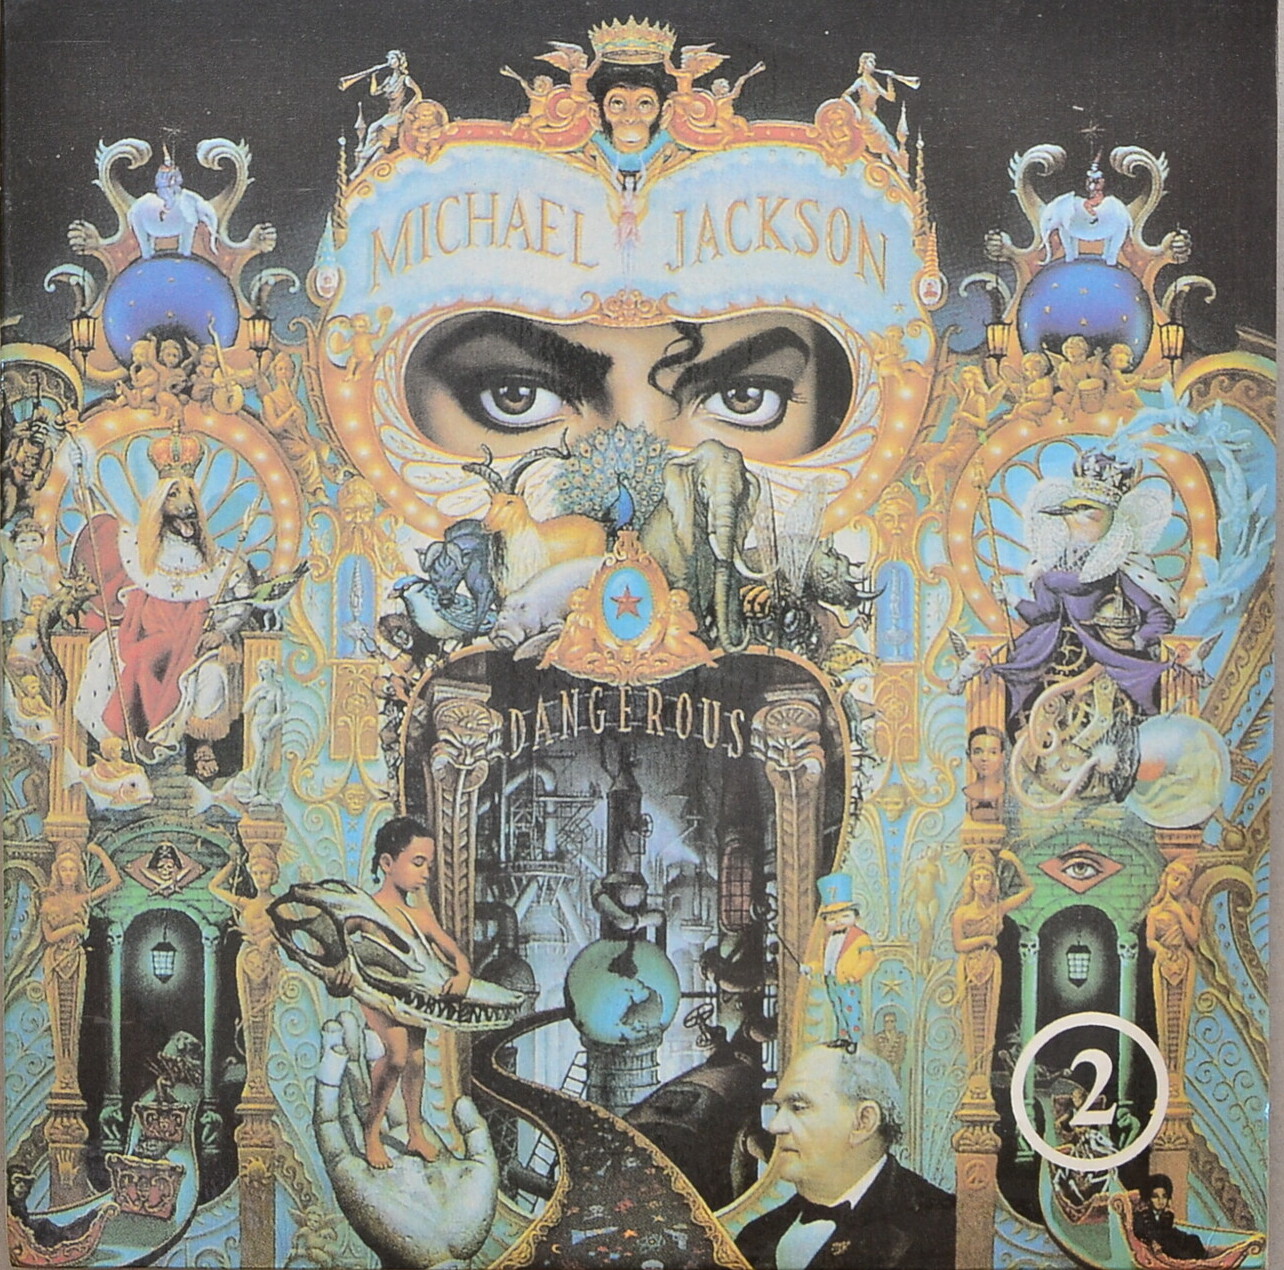 Michael Jackson - Dangerous (2)